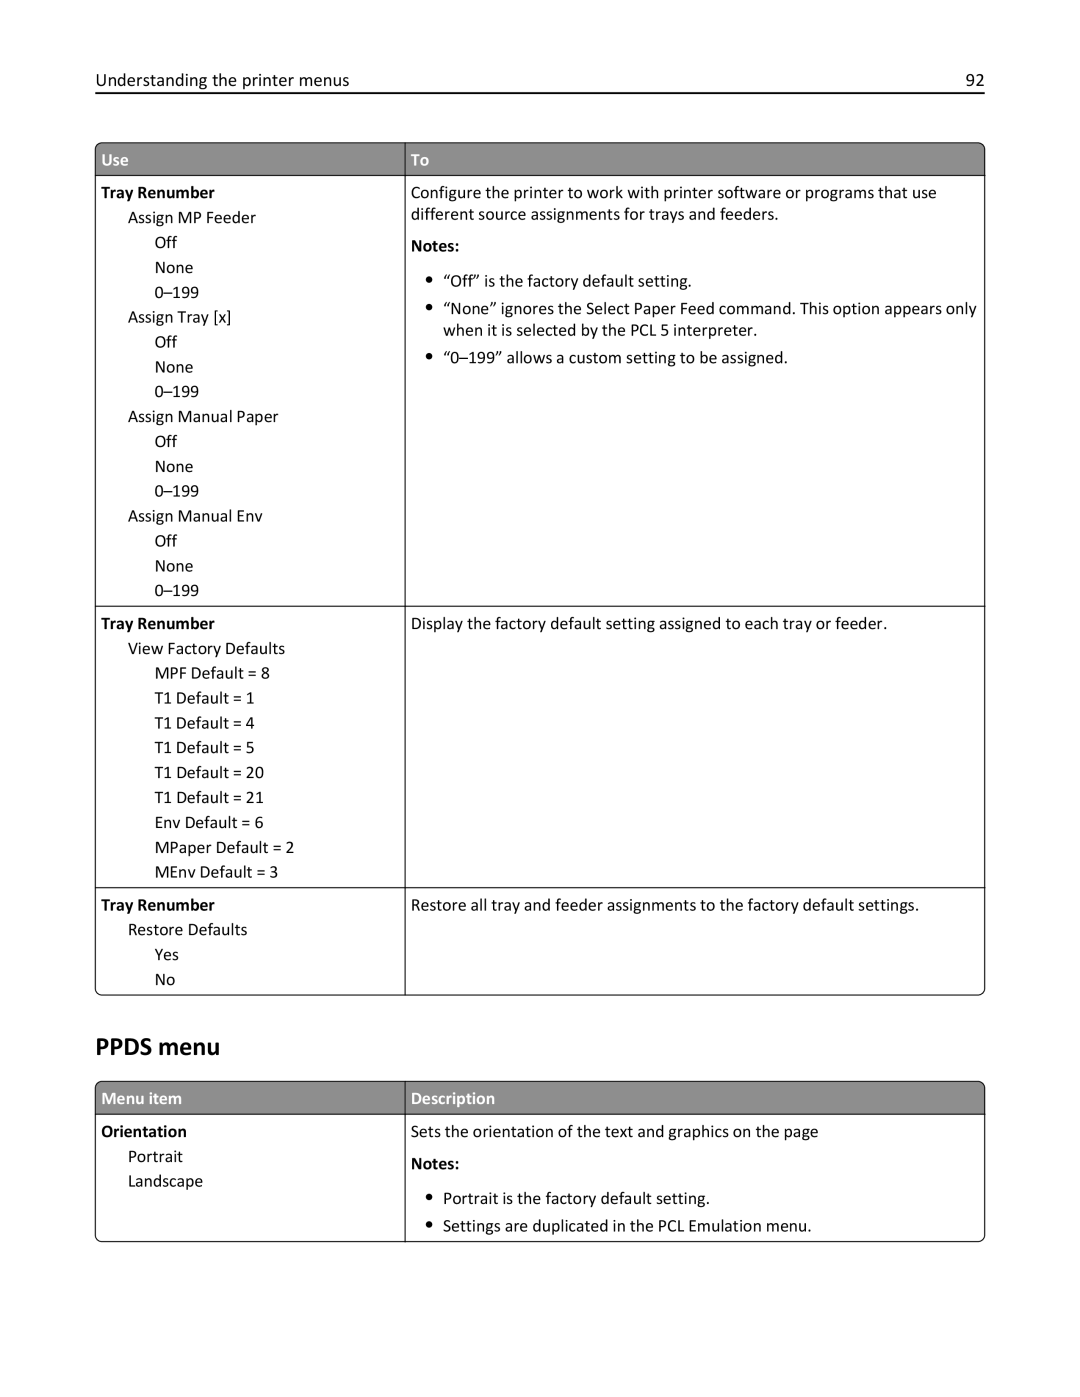 Lexmark CS410 manual Ppds menu, Tray Renumber, Orientation 